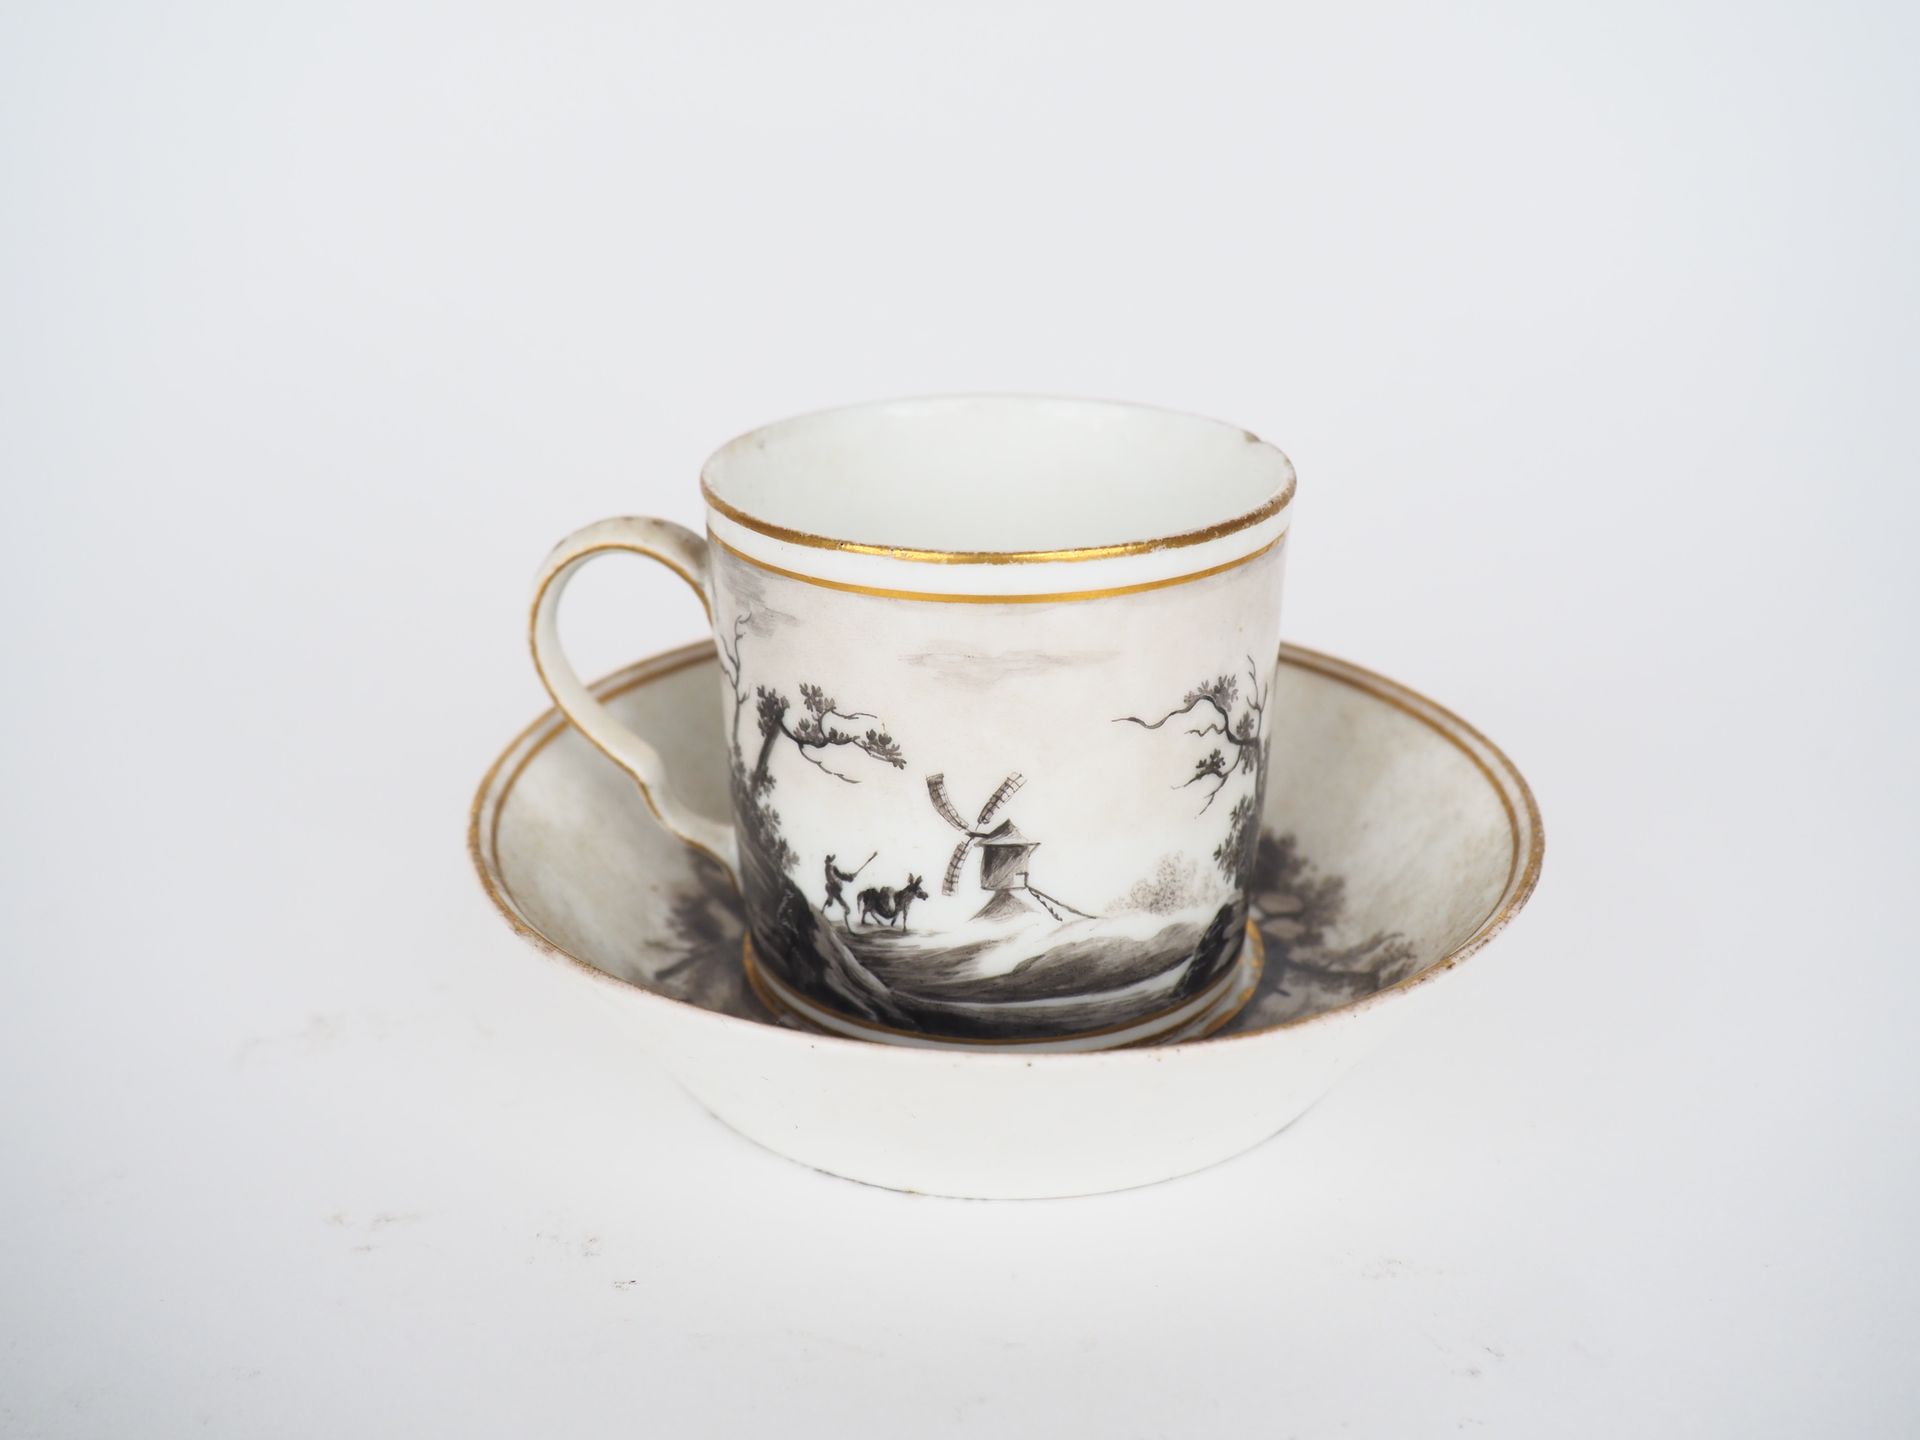 Null 一个撒克逊瓷杯和碟子，用灰泥画装饰着一个生动的风景。

尺寸（杯）：6 x 9 x 6,5厘米。

尺寸（碟子）：3 x 12.5厘米。